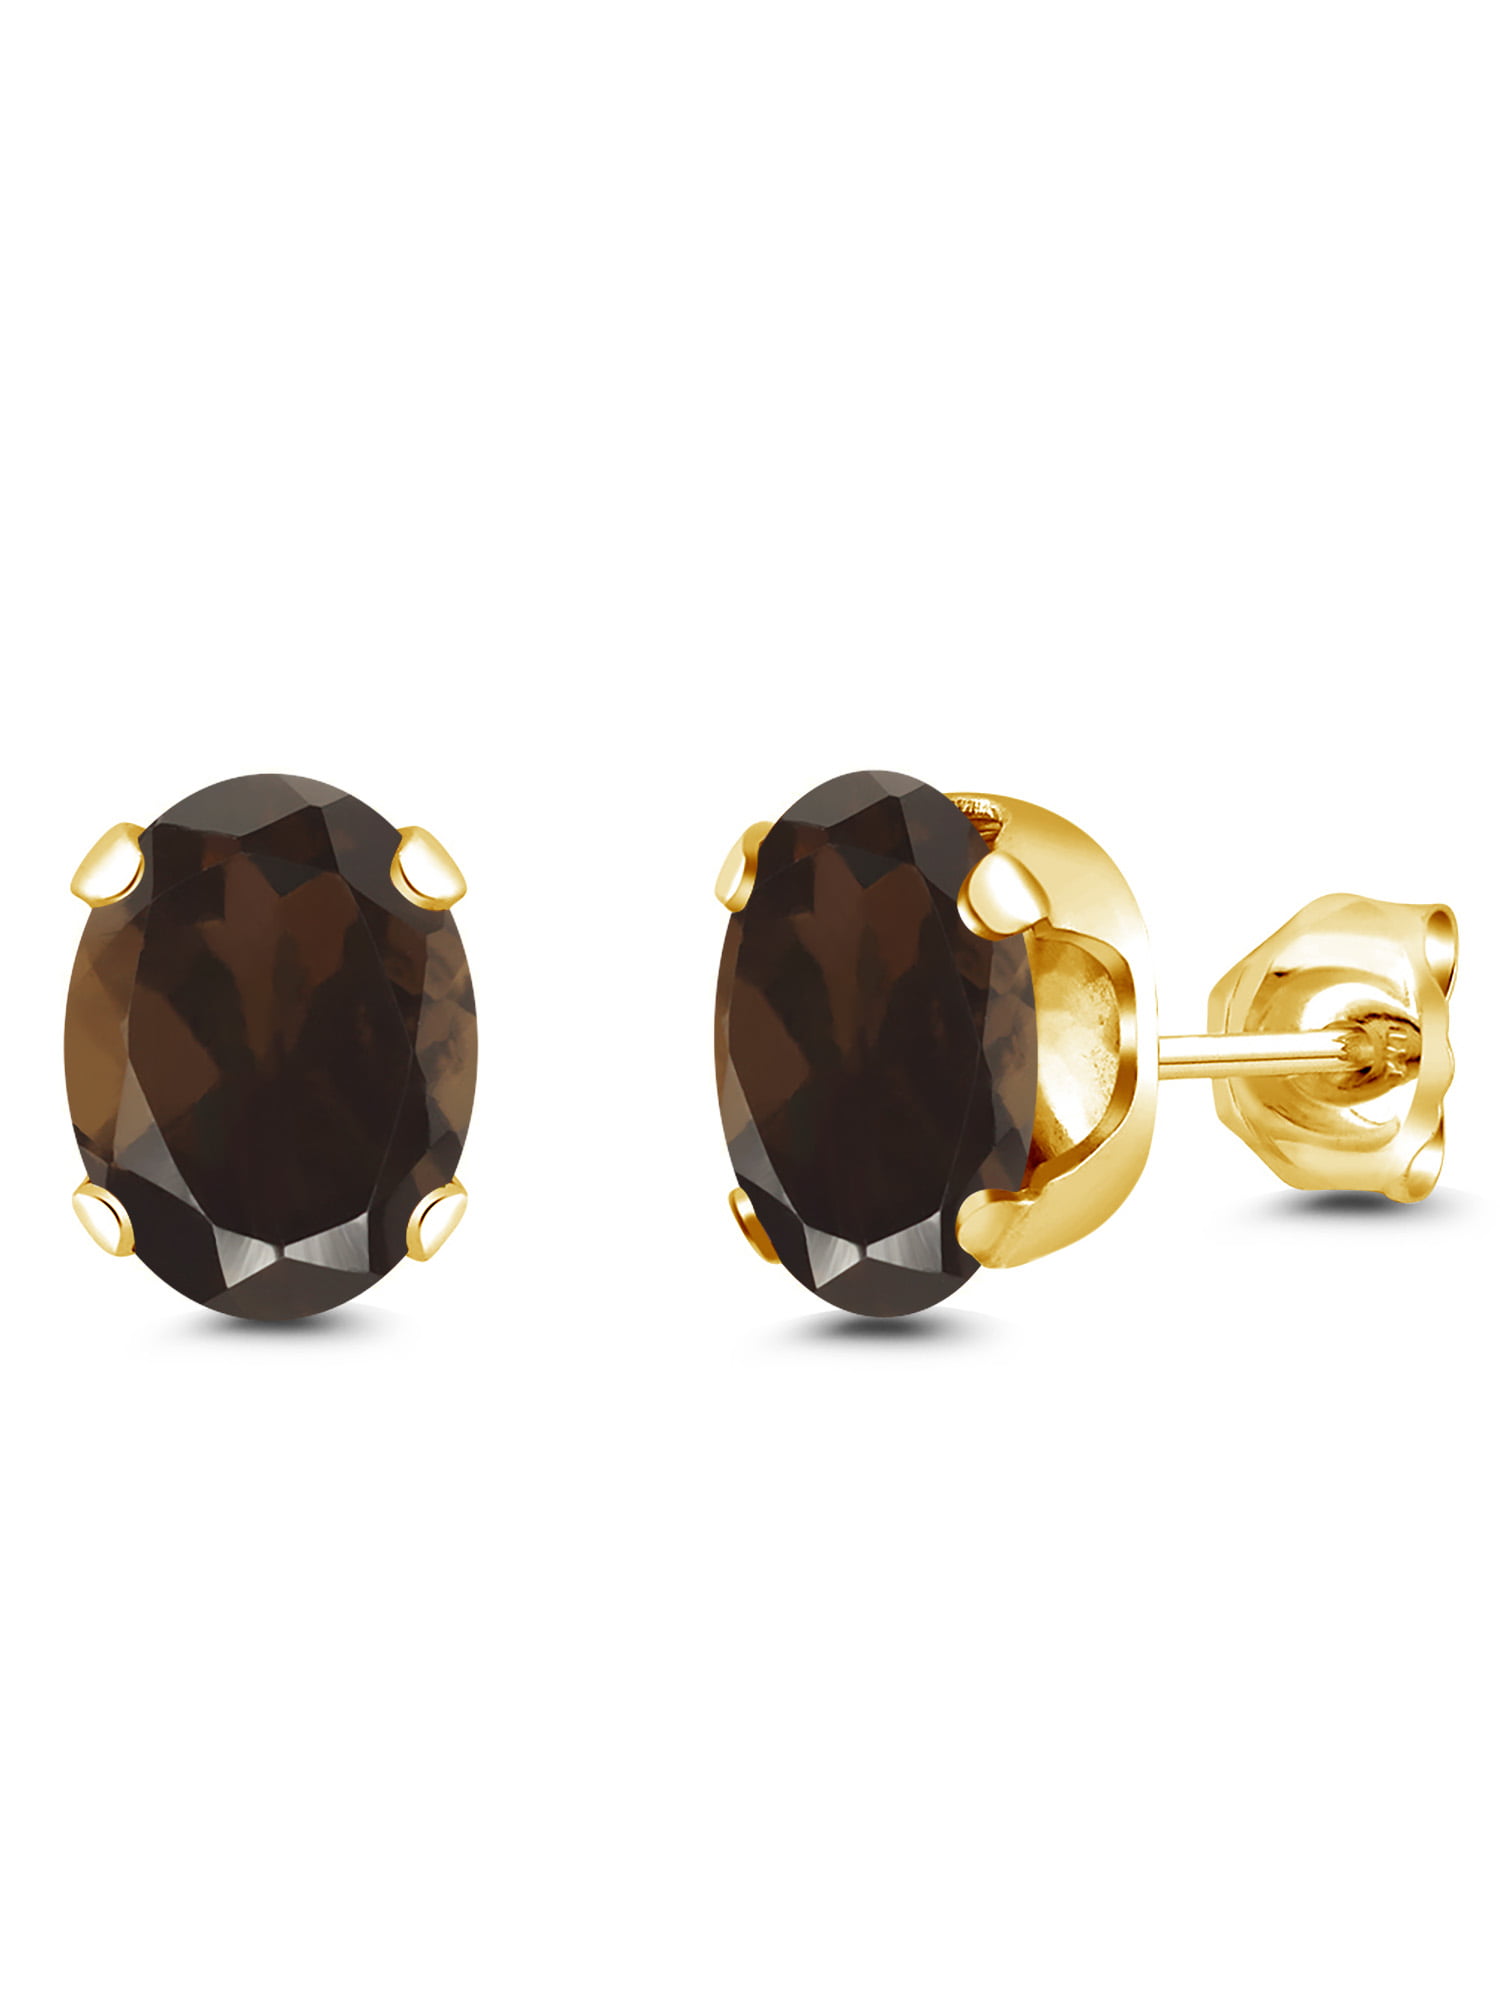 Details about   Fine Jewelry Gemstone Natural Rhodo Light  Earrings